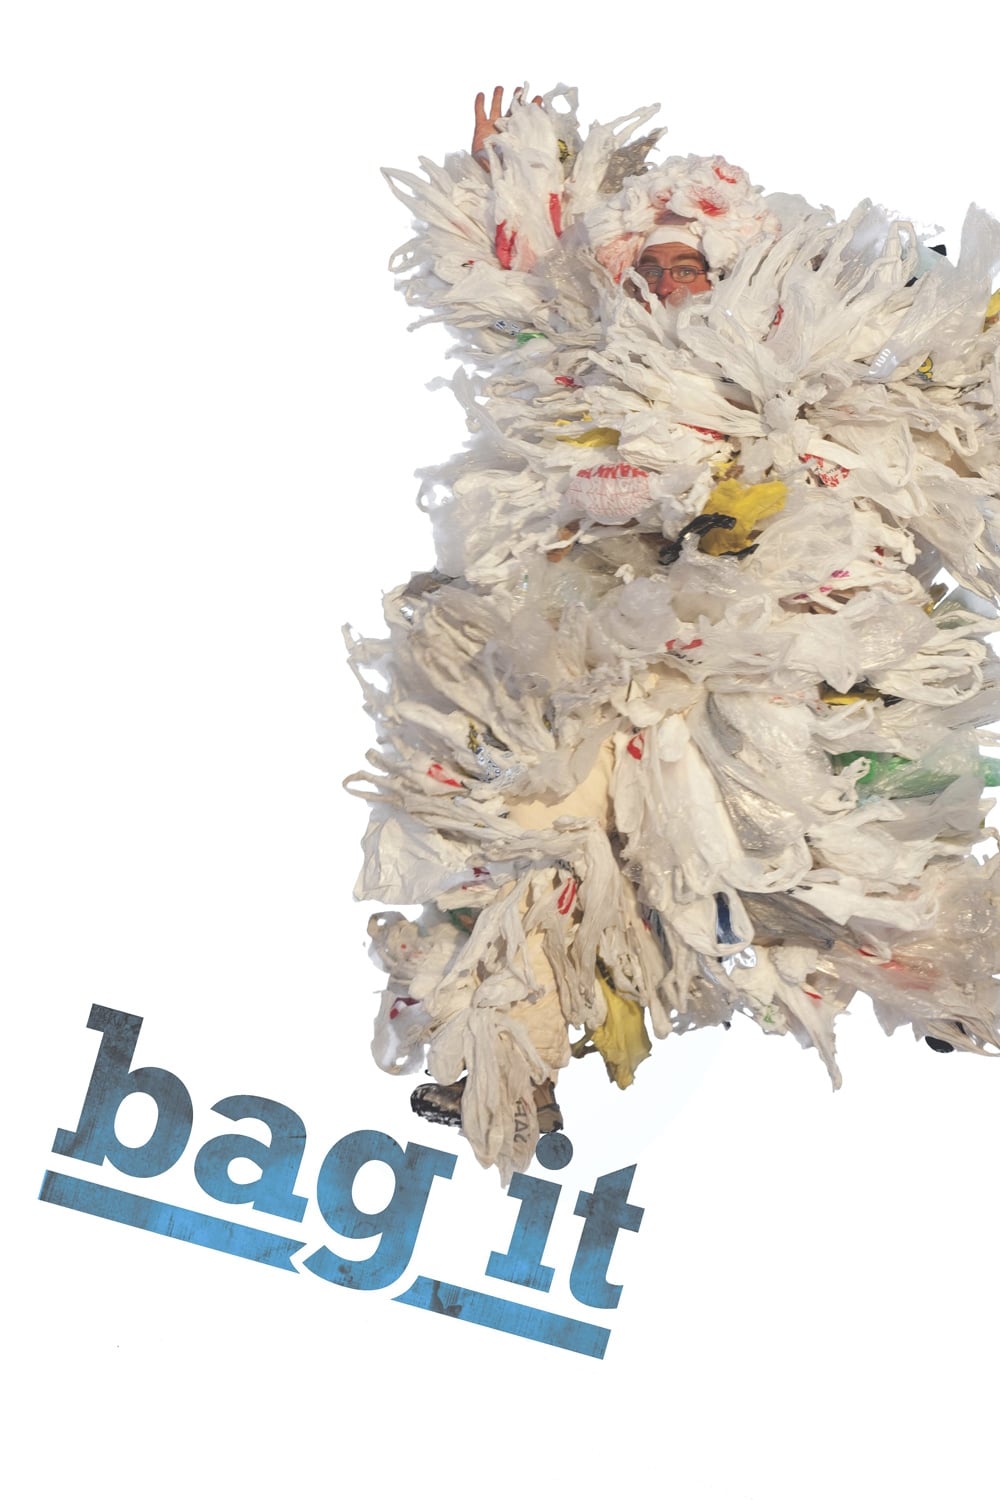 Bag It (2011)